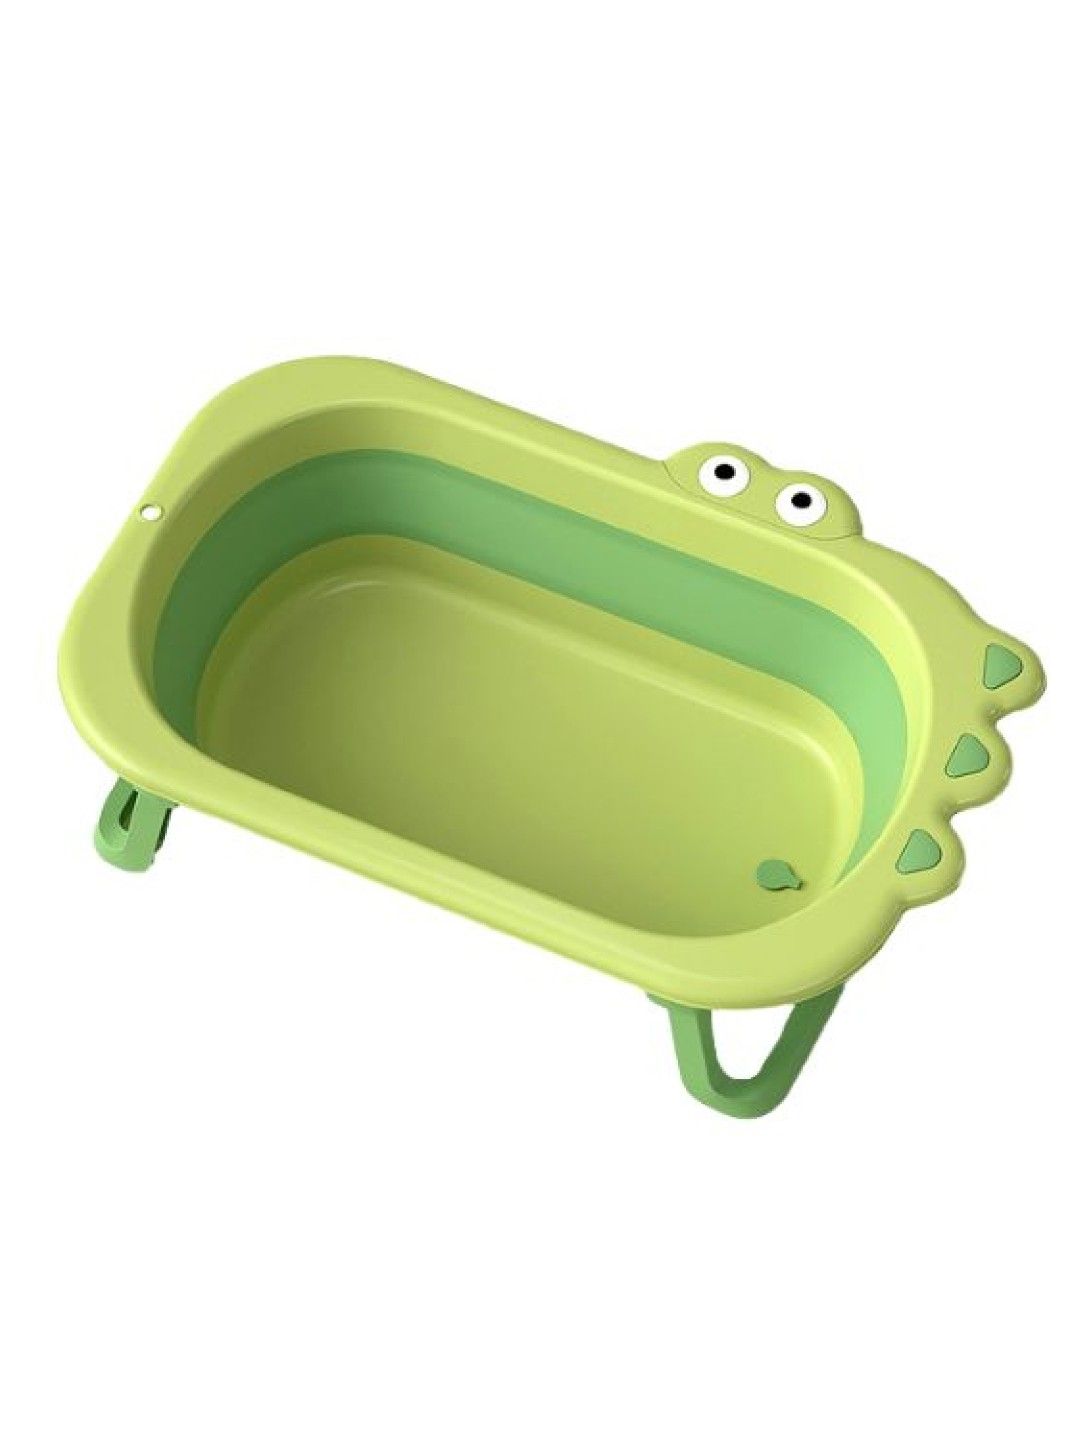 BabyPro Foldable Bath Tub For Babies (Green- Image 1)